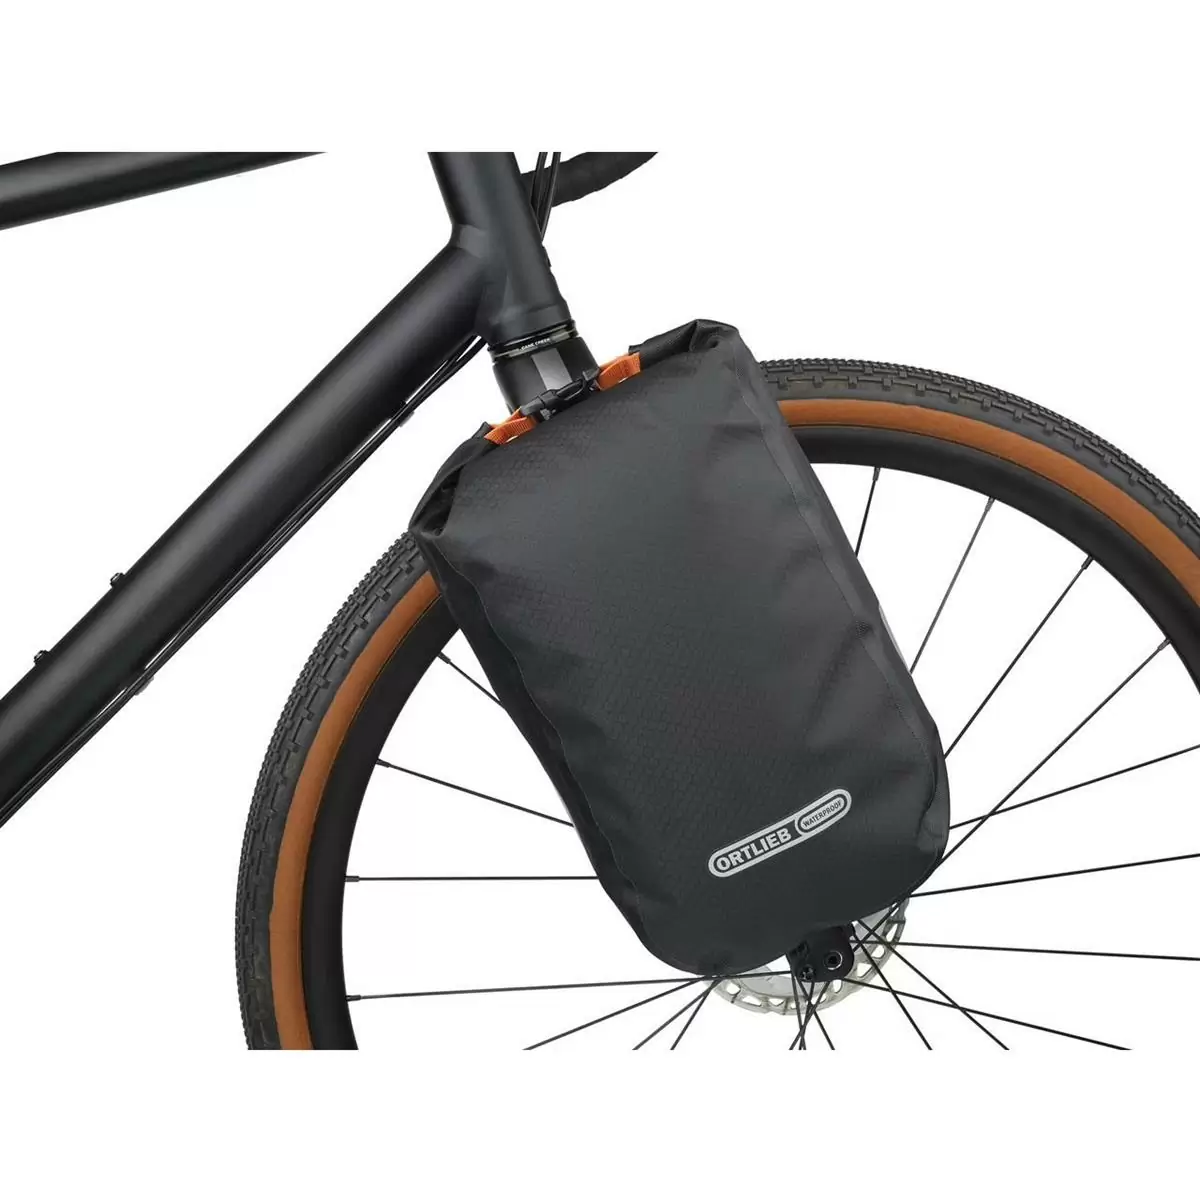 Bolsa de embalaje para bicicleta Tenedor F9992 negro #6